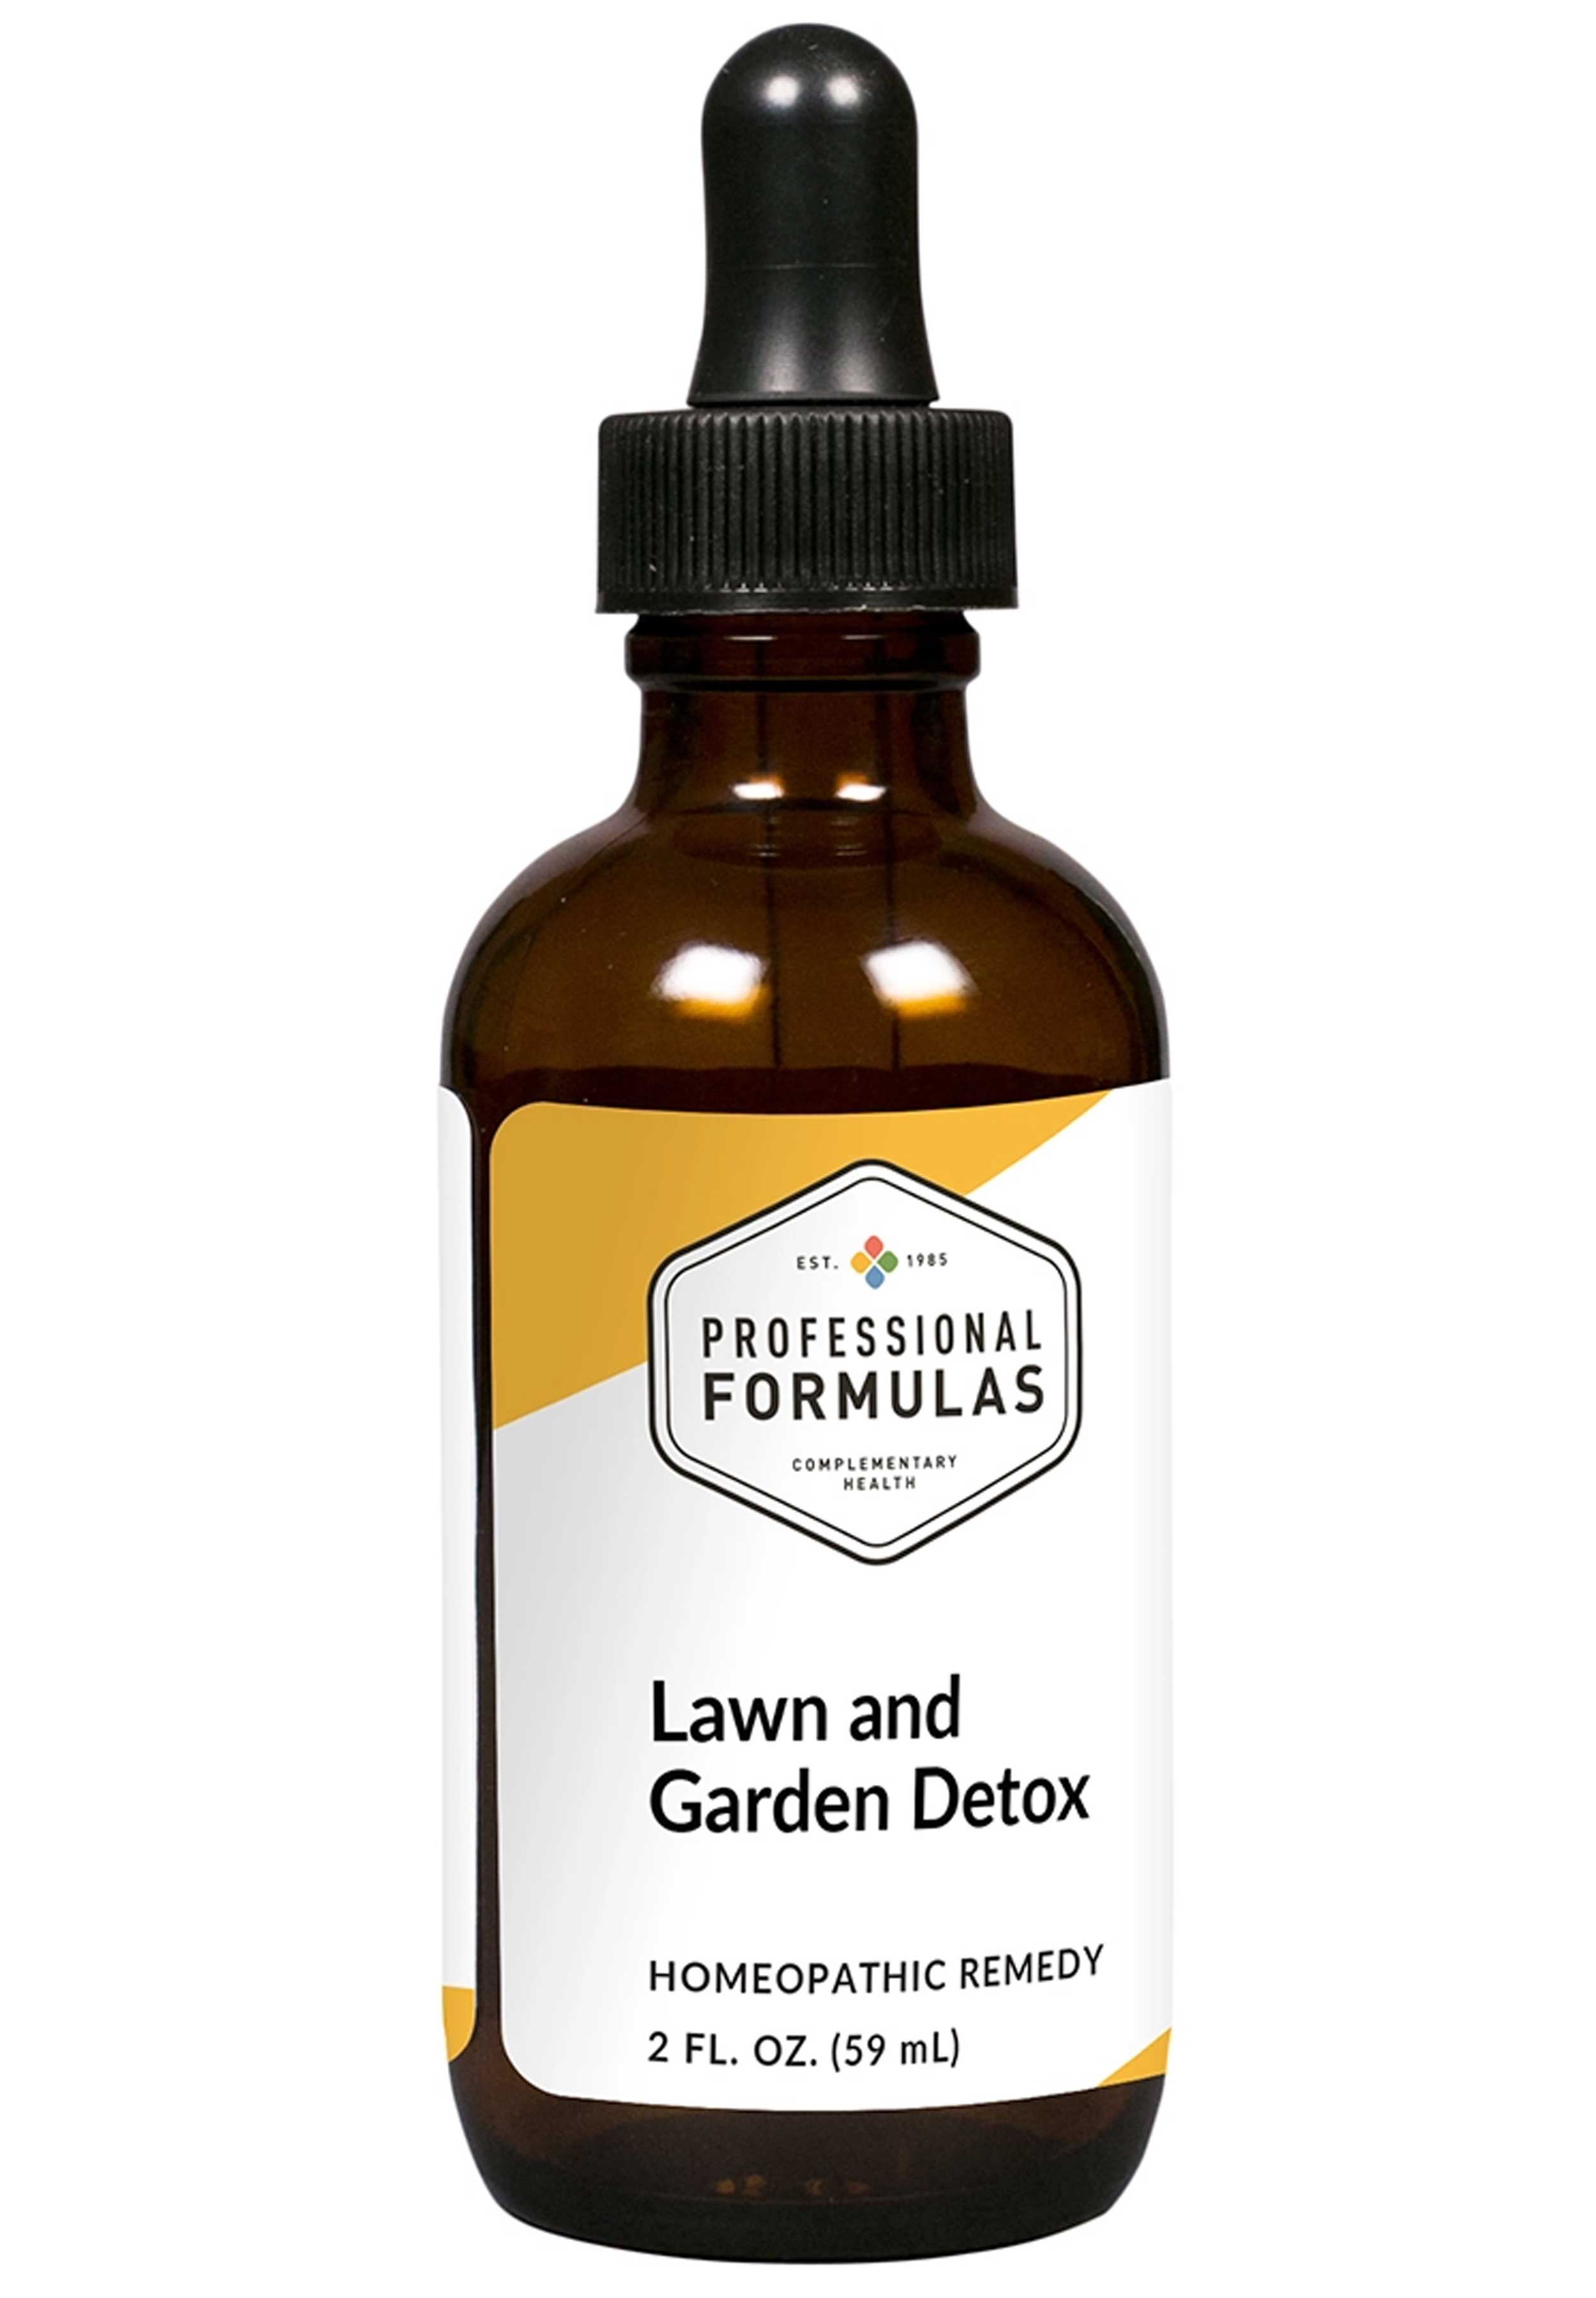 Professional Formulas Lawn and Garden Detox